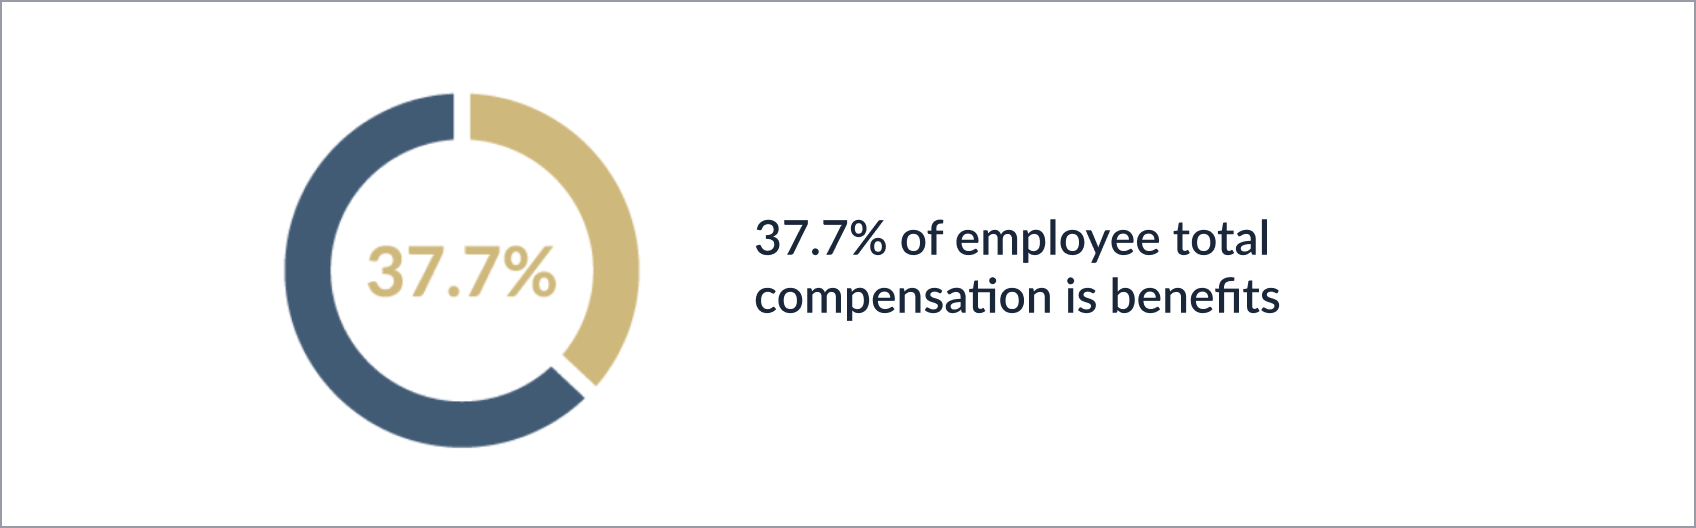 percentage of employee compensation benefits 